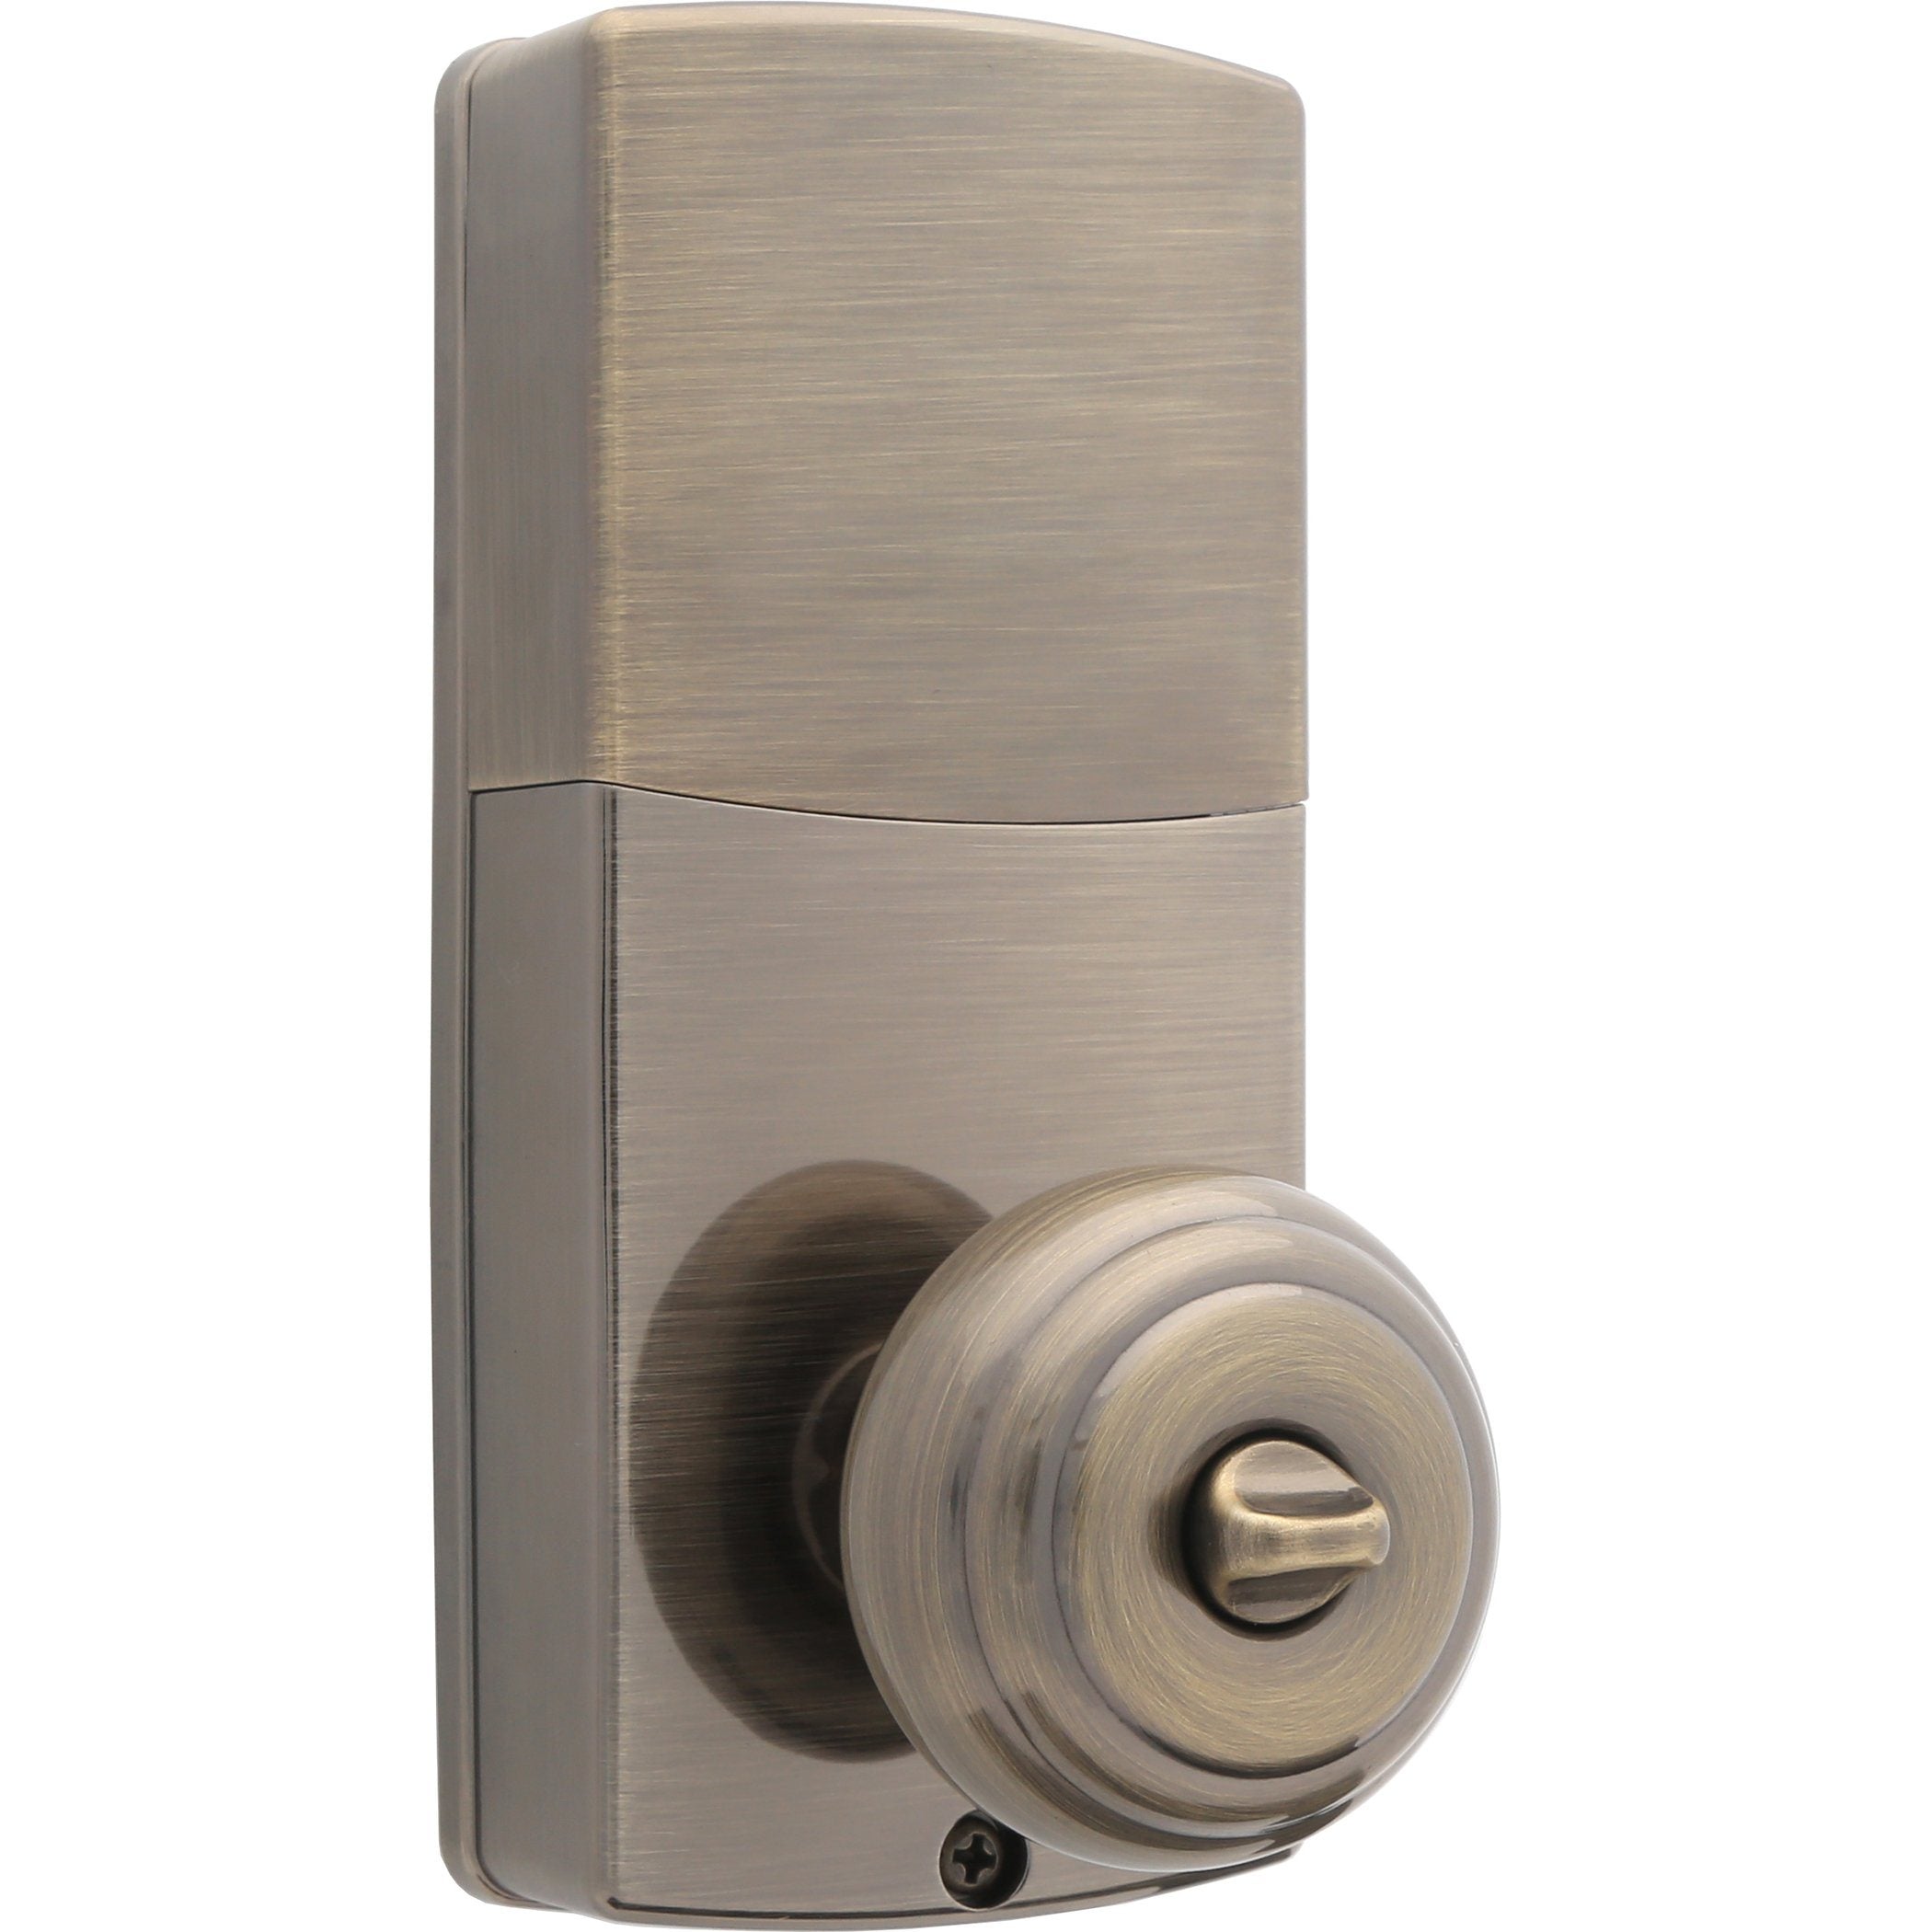 Honeywell 8732101 Electronic Entry Knob Door Lock with Keypad in